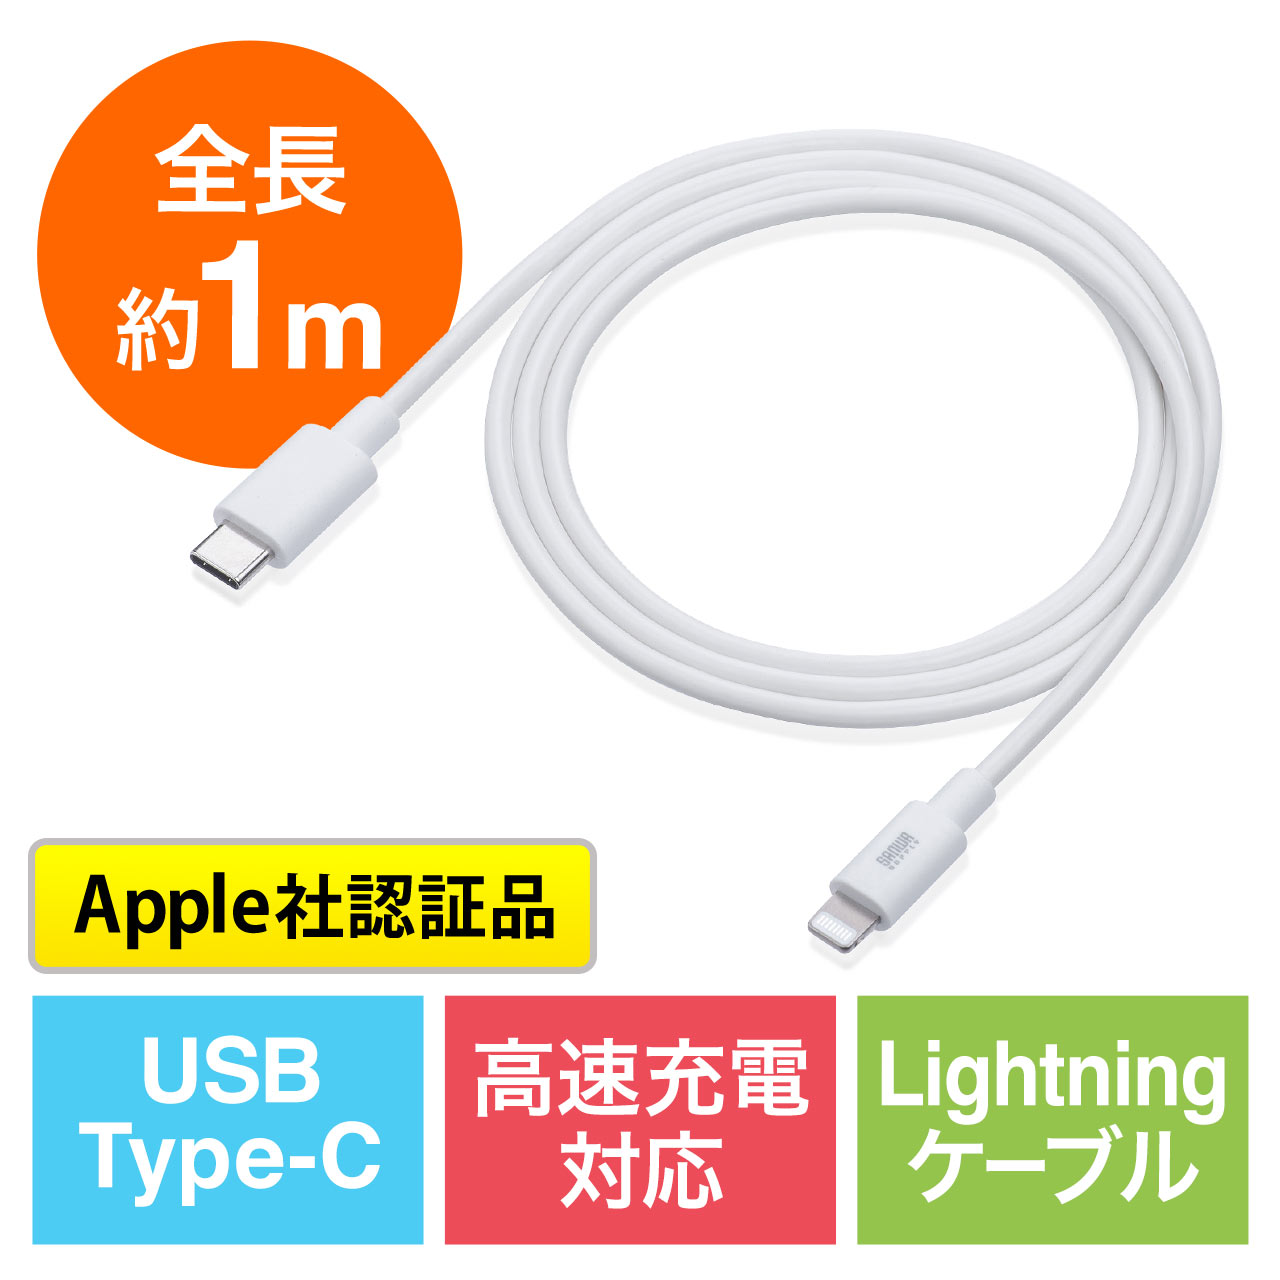 Apple 純正 USB タイプC ライトニングケーブル 1m 未使用 新品 - 携帯電話